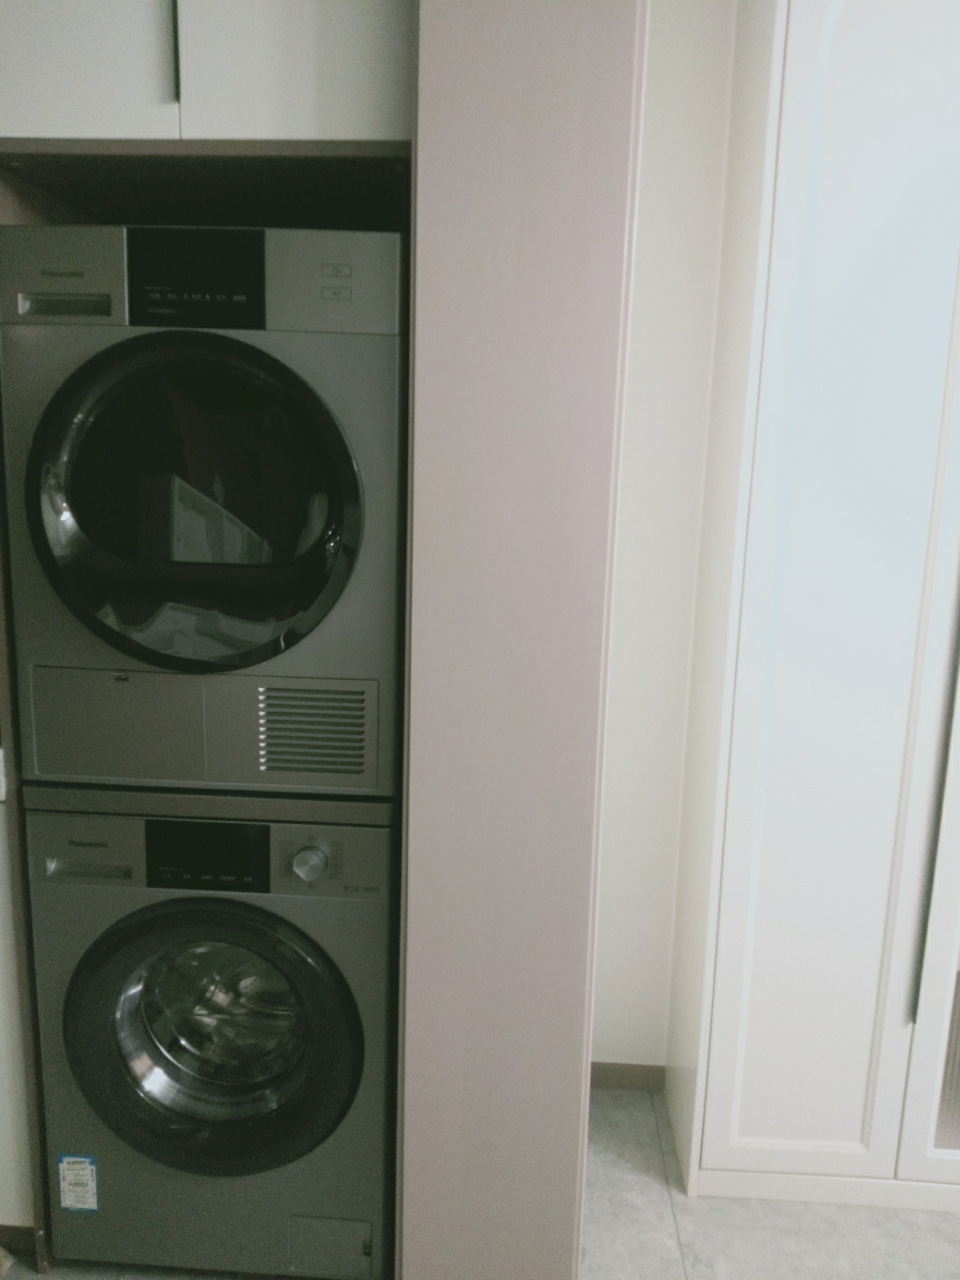 [10+10KG洗烘套装] 松下(Panasonic) 银河系智能热泵式洗衣机烘干机除菌洗烘套装 N1MT+EH10S晒单图